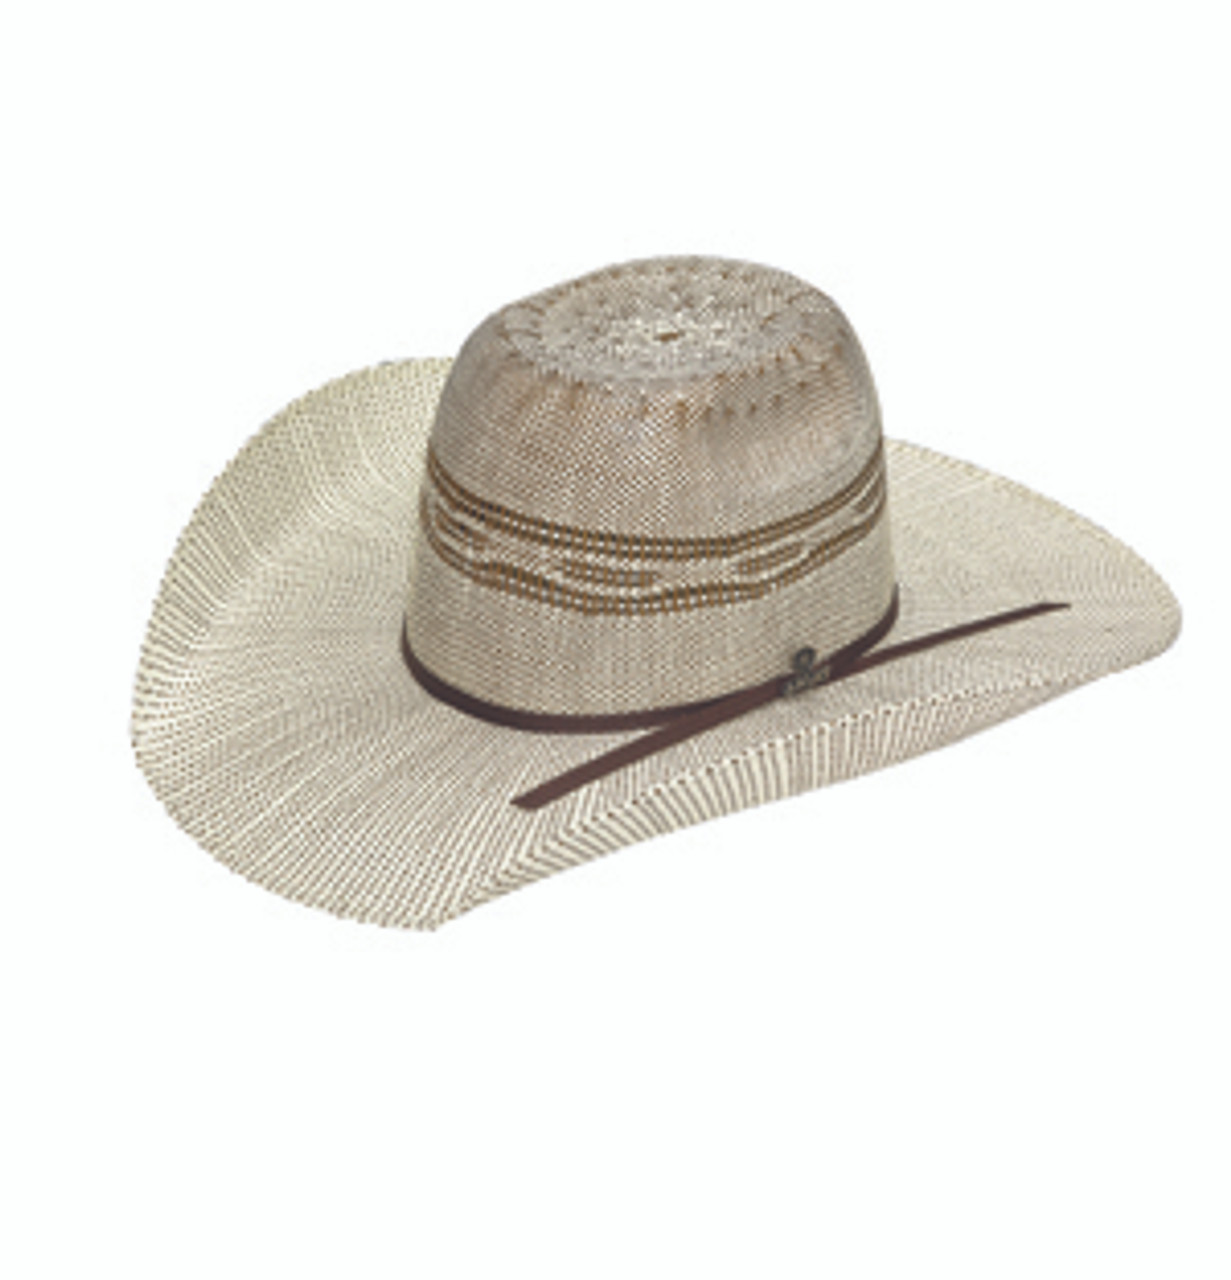 Ariat 20X Double S Straw Cowboy Hat